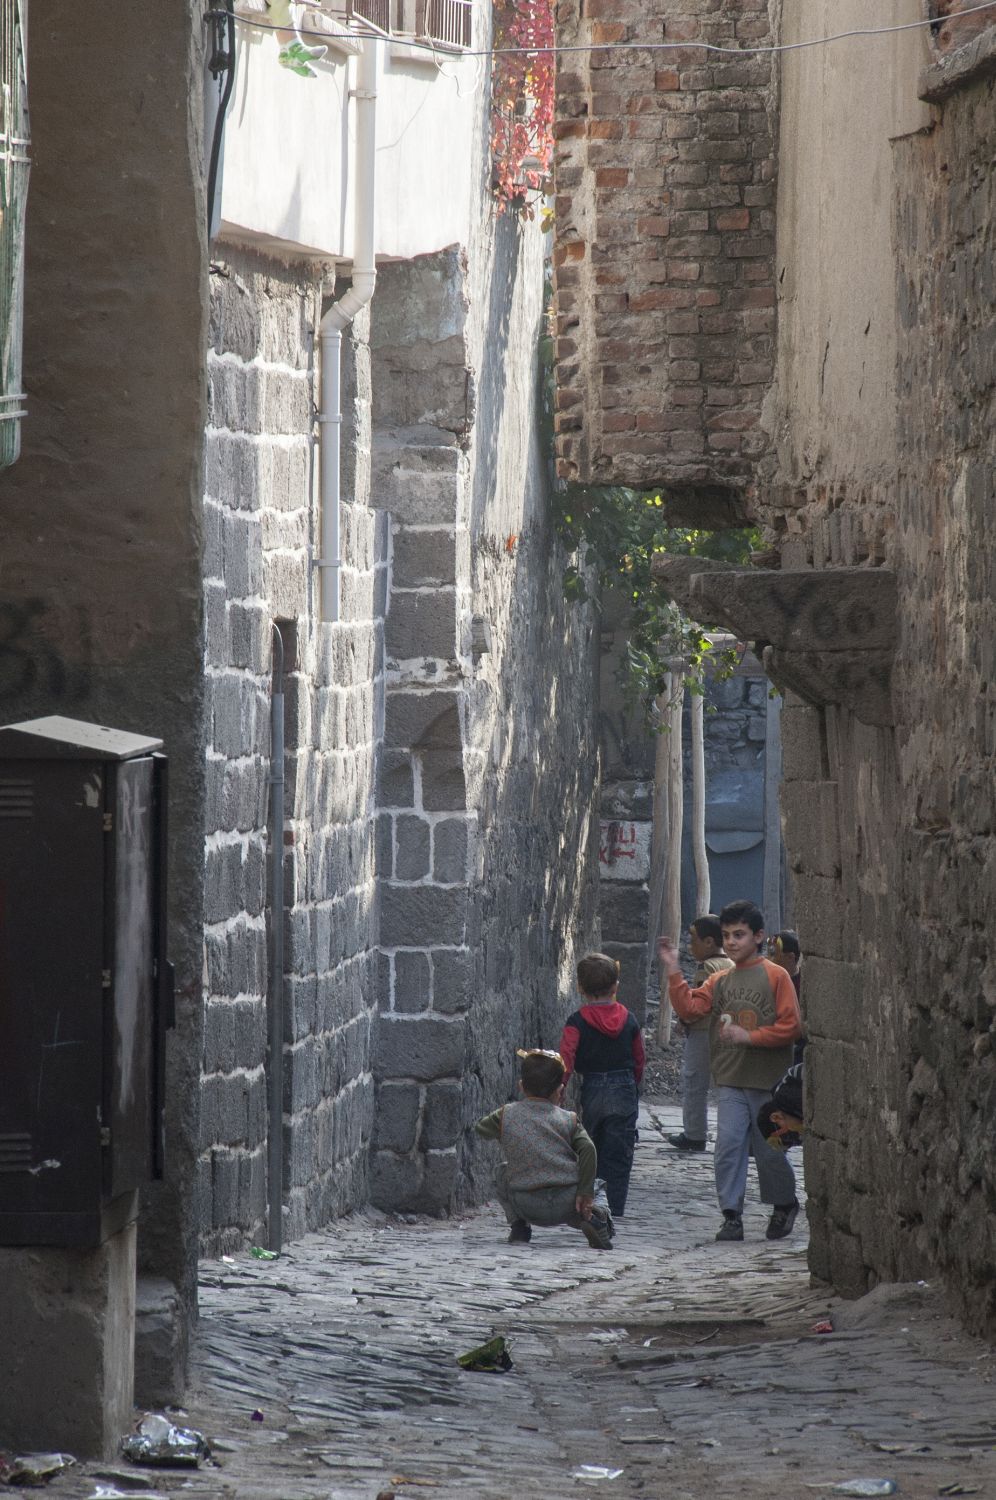 Diyarbakır, Turkey: view of street in old walled city.